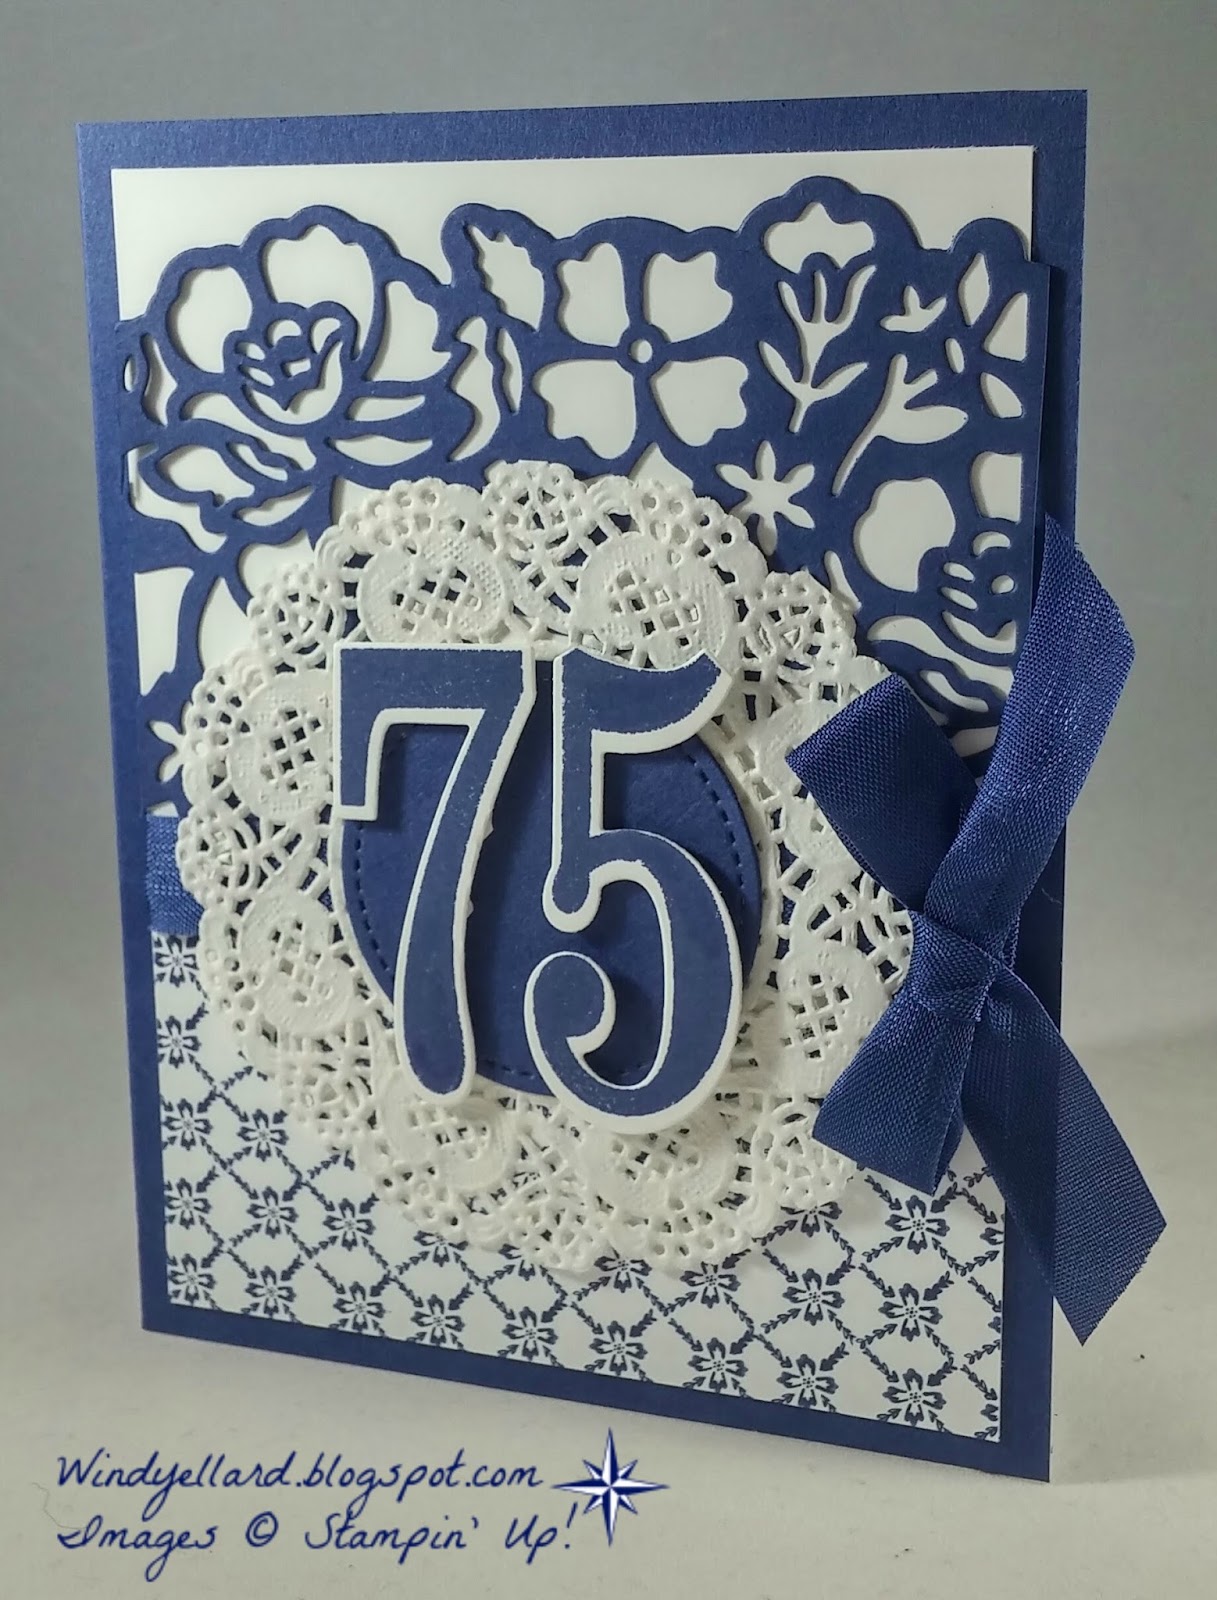 windy-s-wonderful-creations-75th-birthday-card